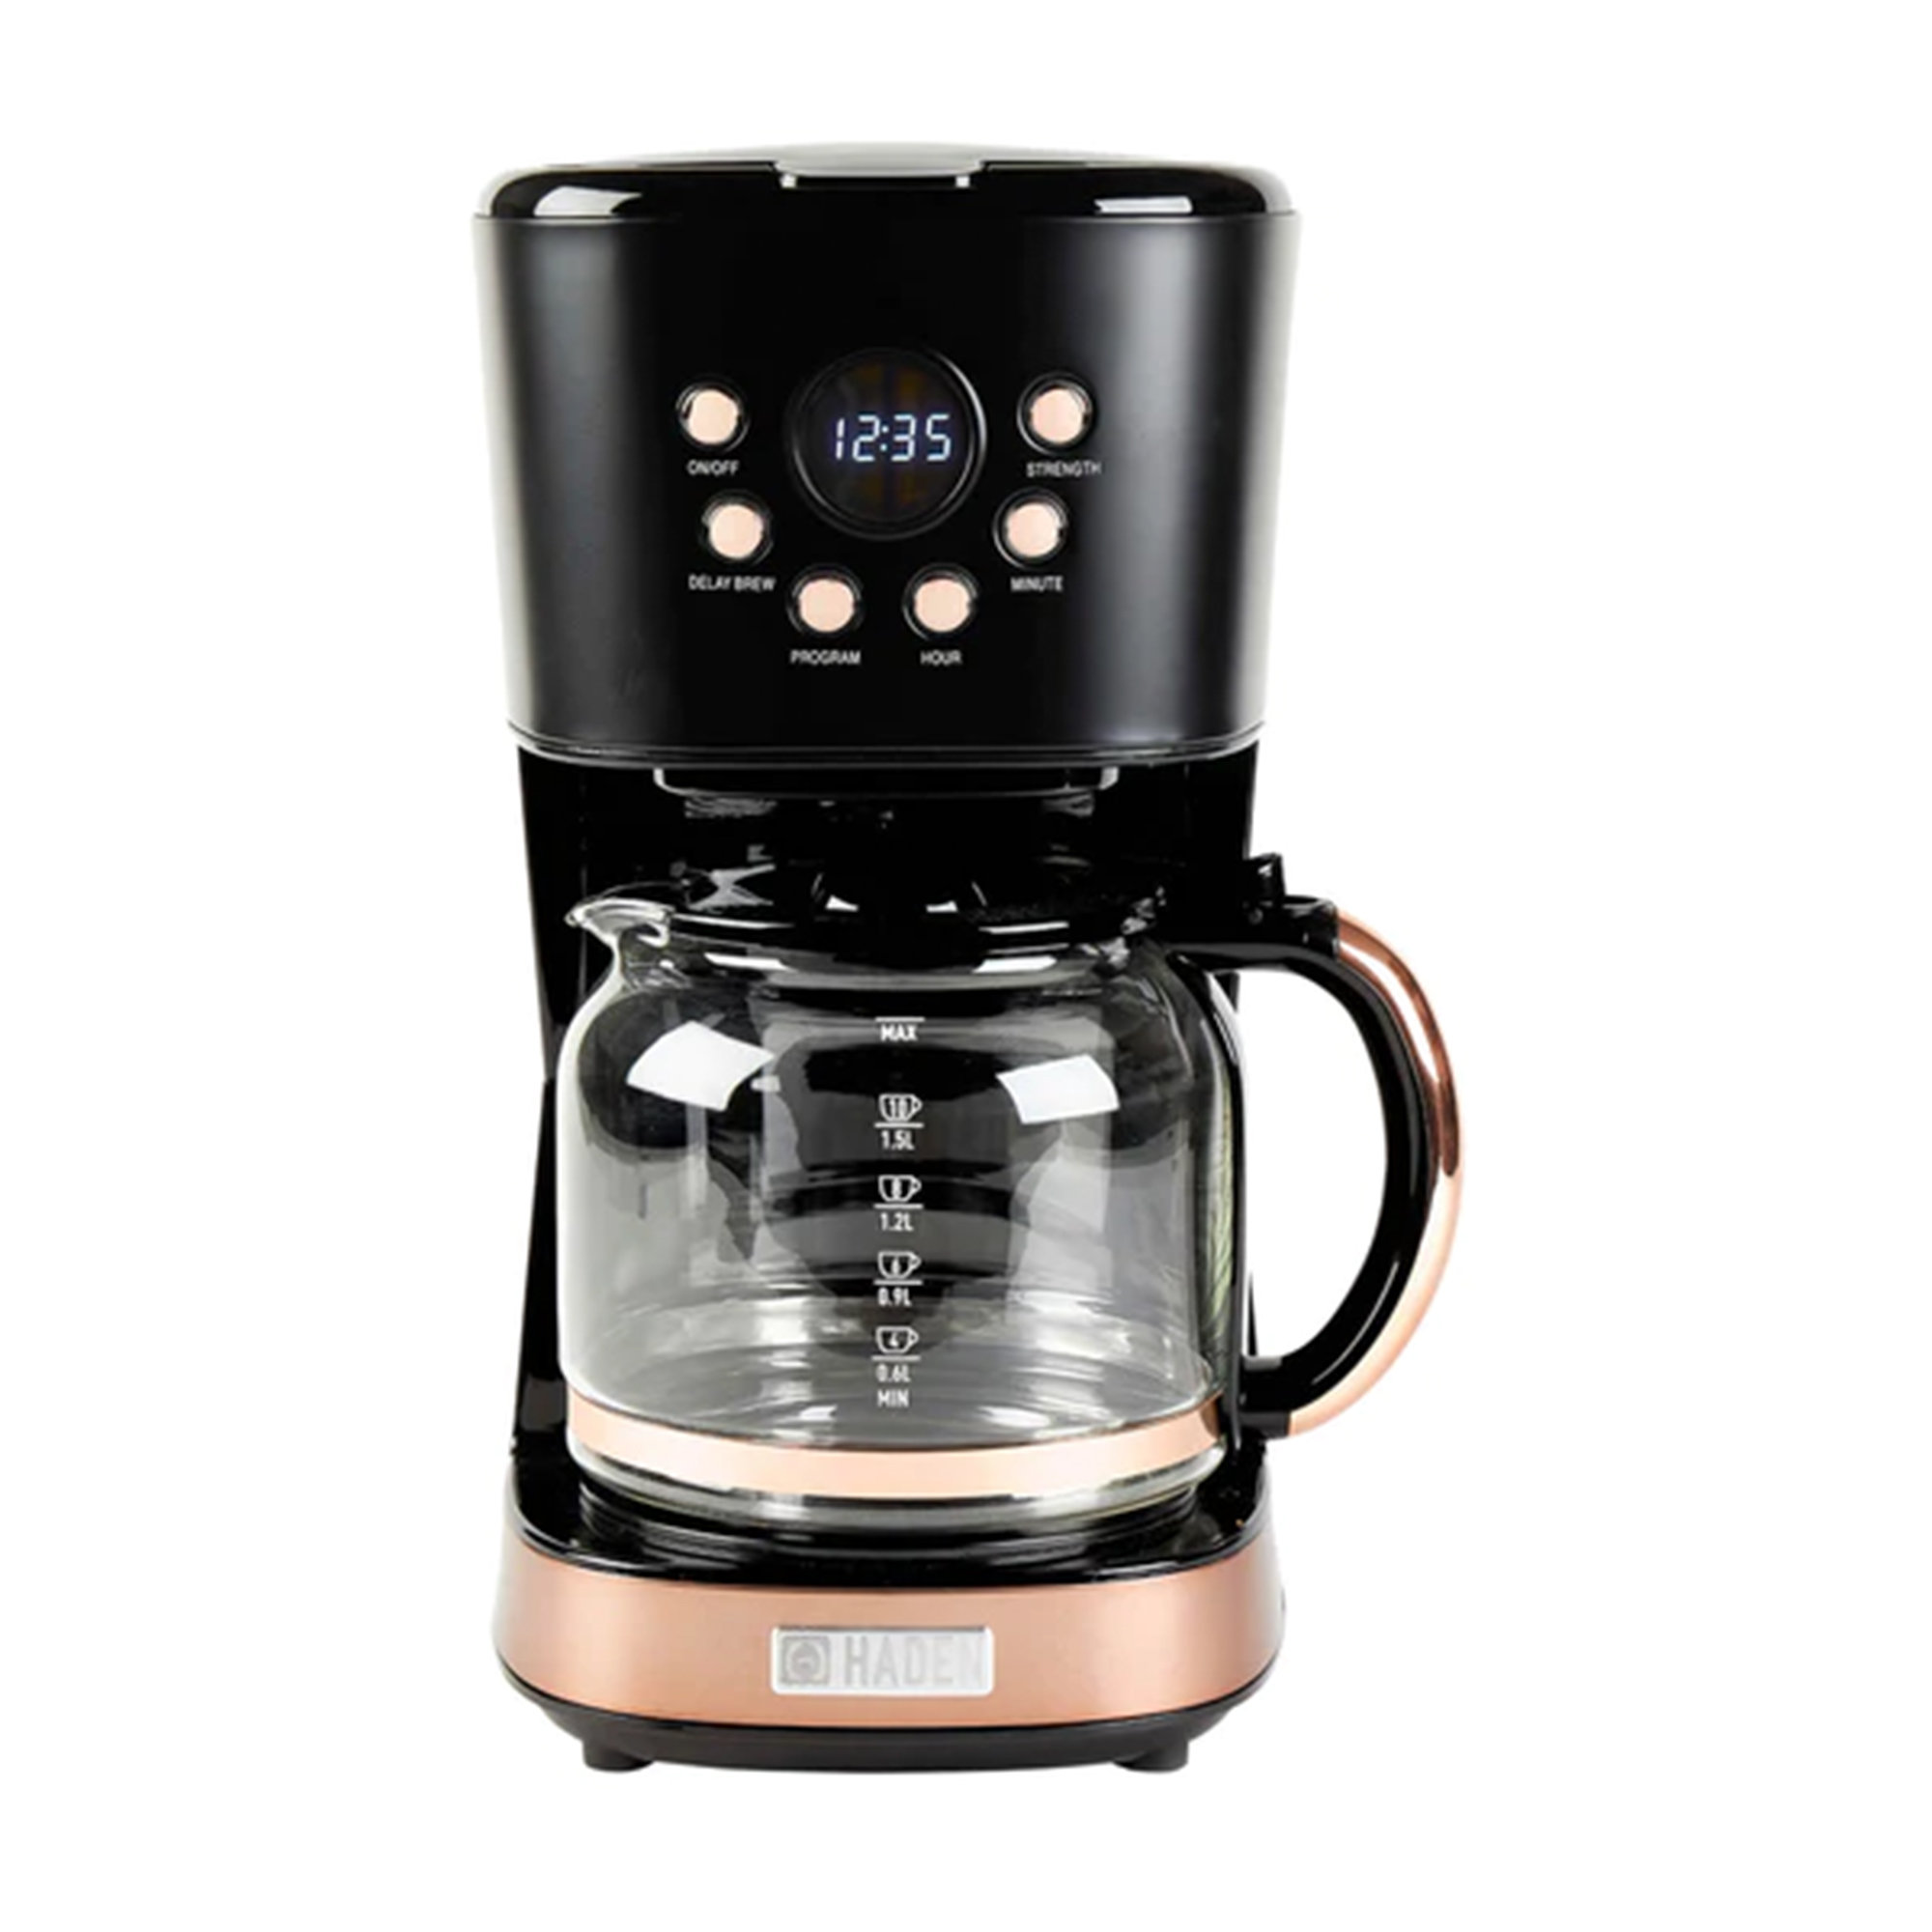 Haden - 12-Cup Coffee Maker - Black/Copper